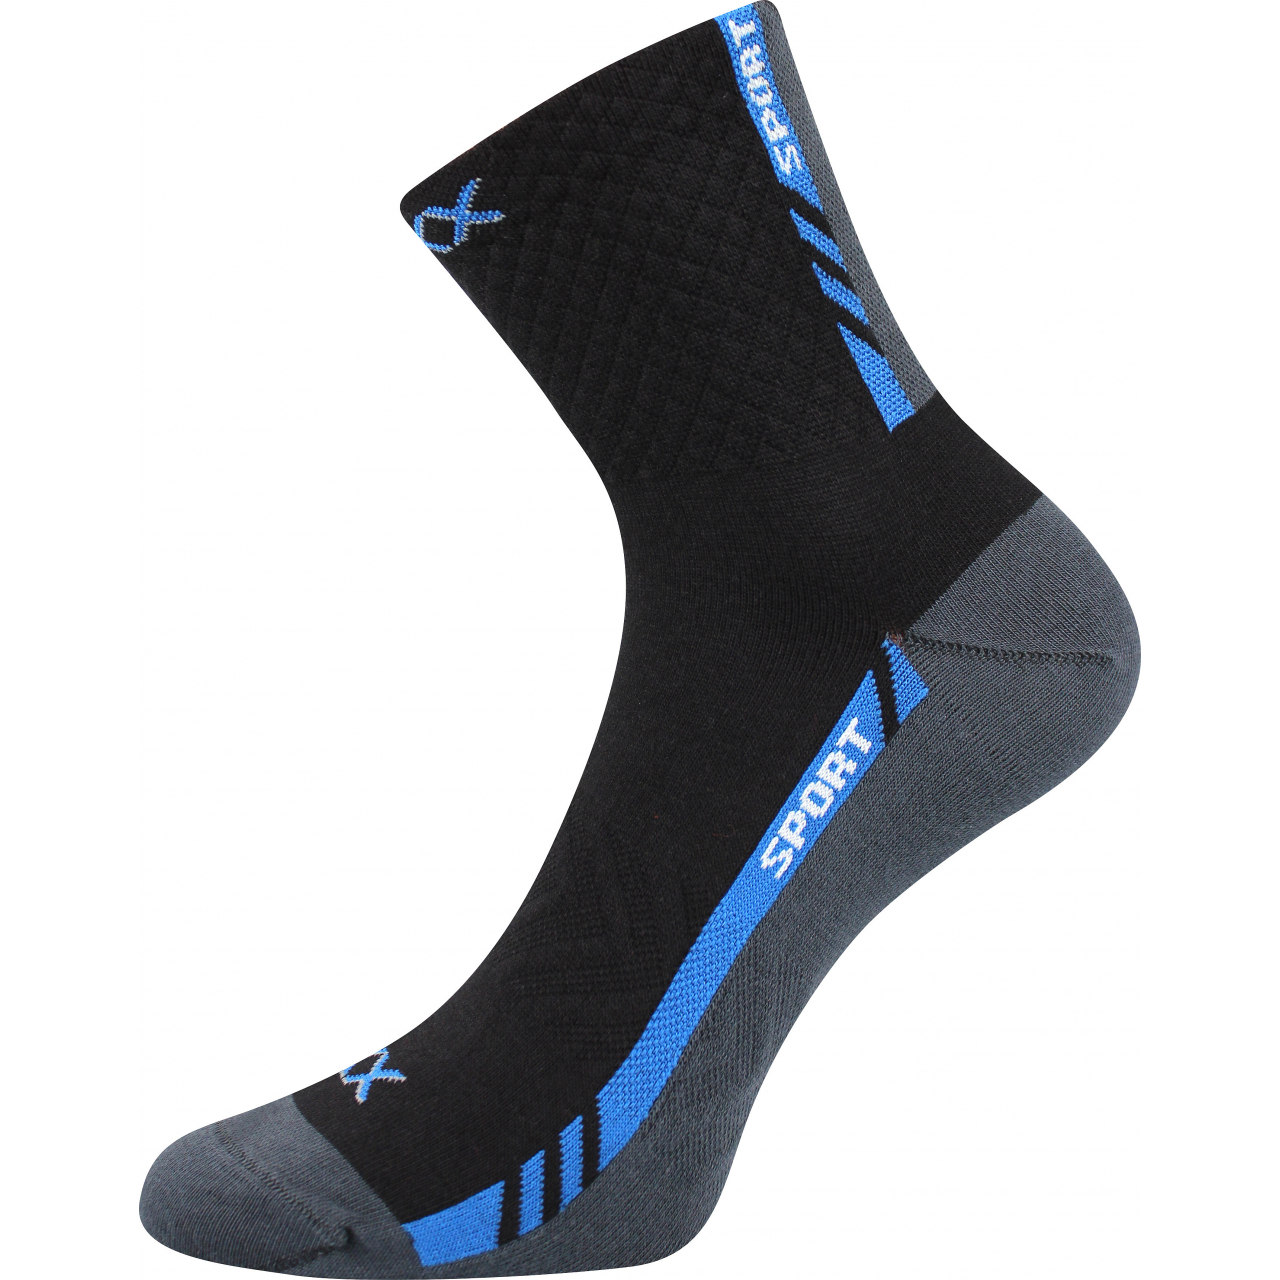 Ponožky sportovní Voxx Pius - černé-šedé, 43-46